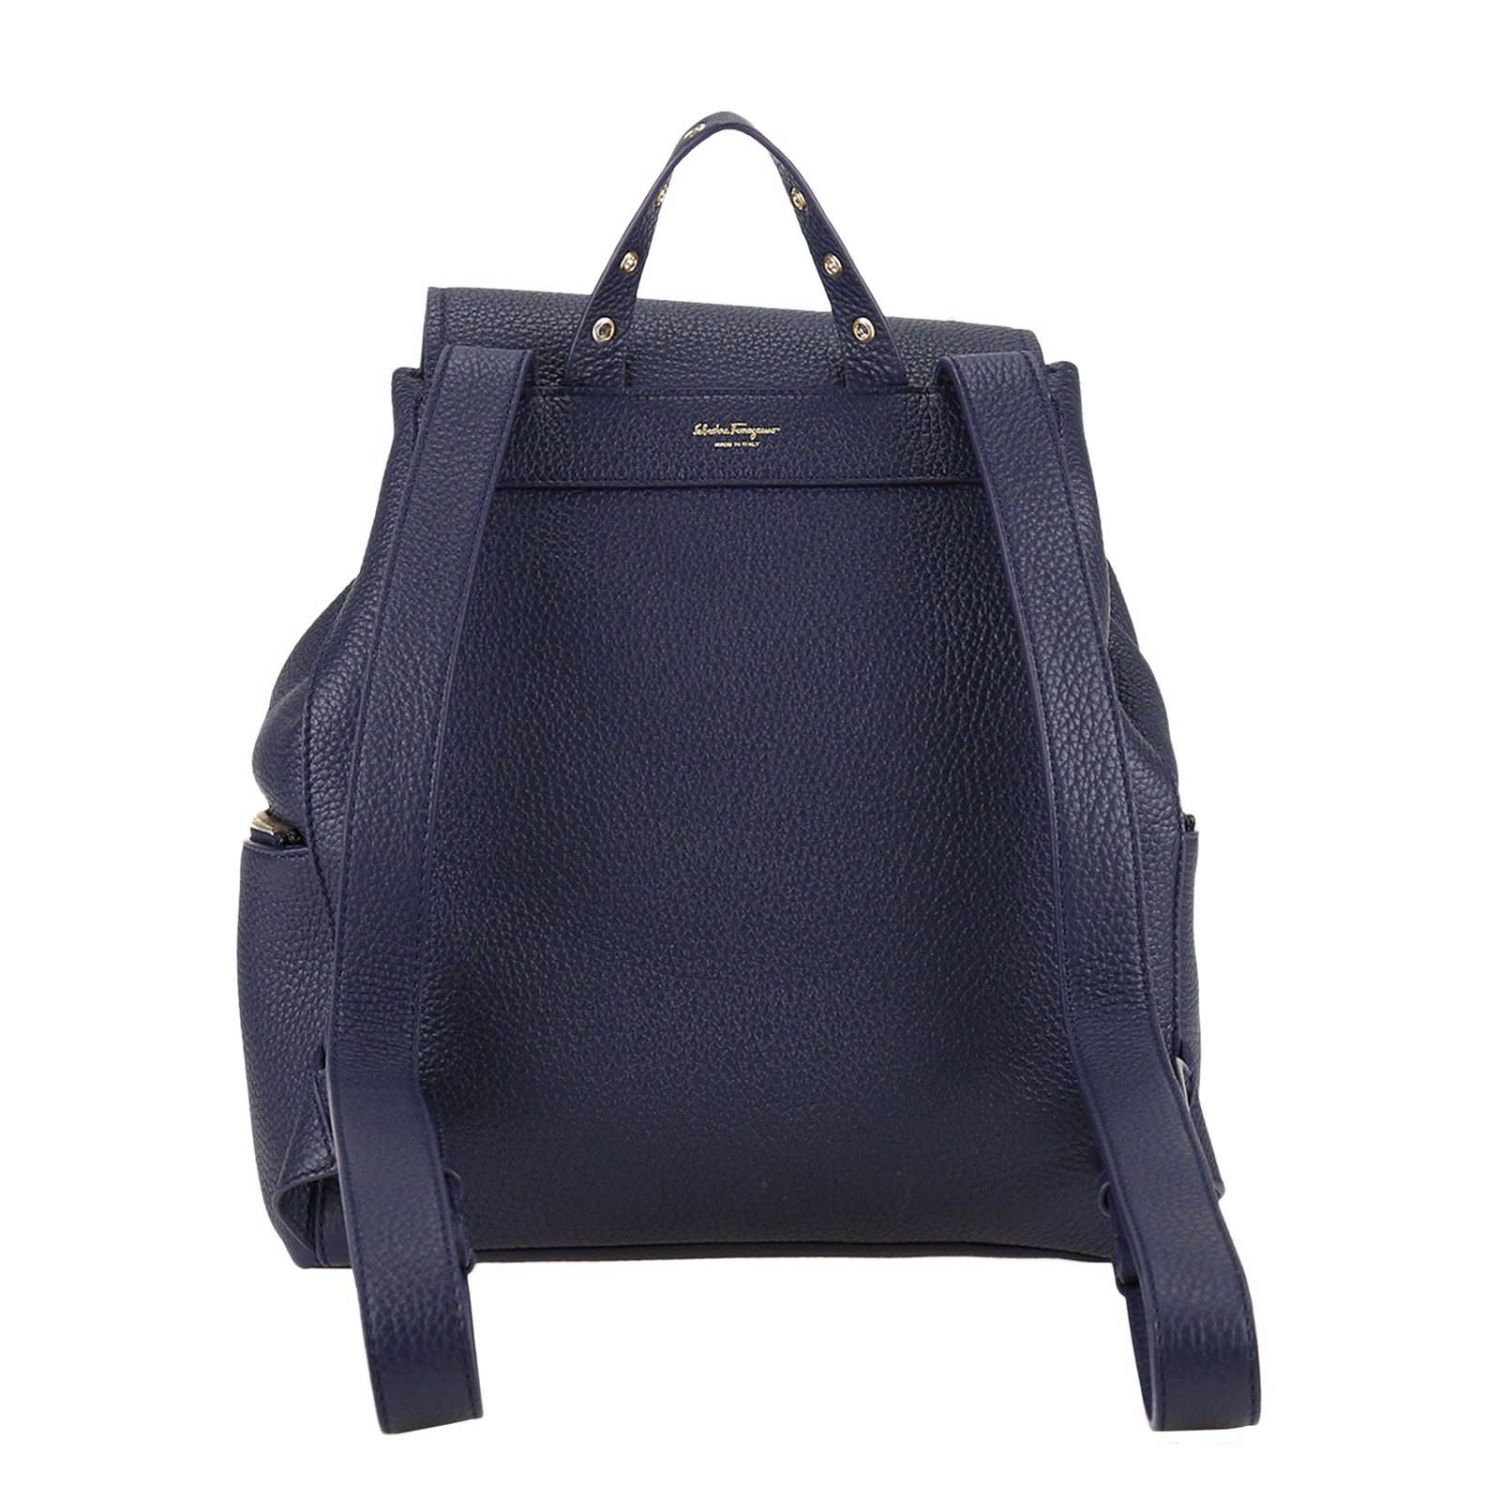 Salvatore Ferragamo Outlet: Shoulder bag women | Backpack Salvatore ...